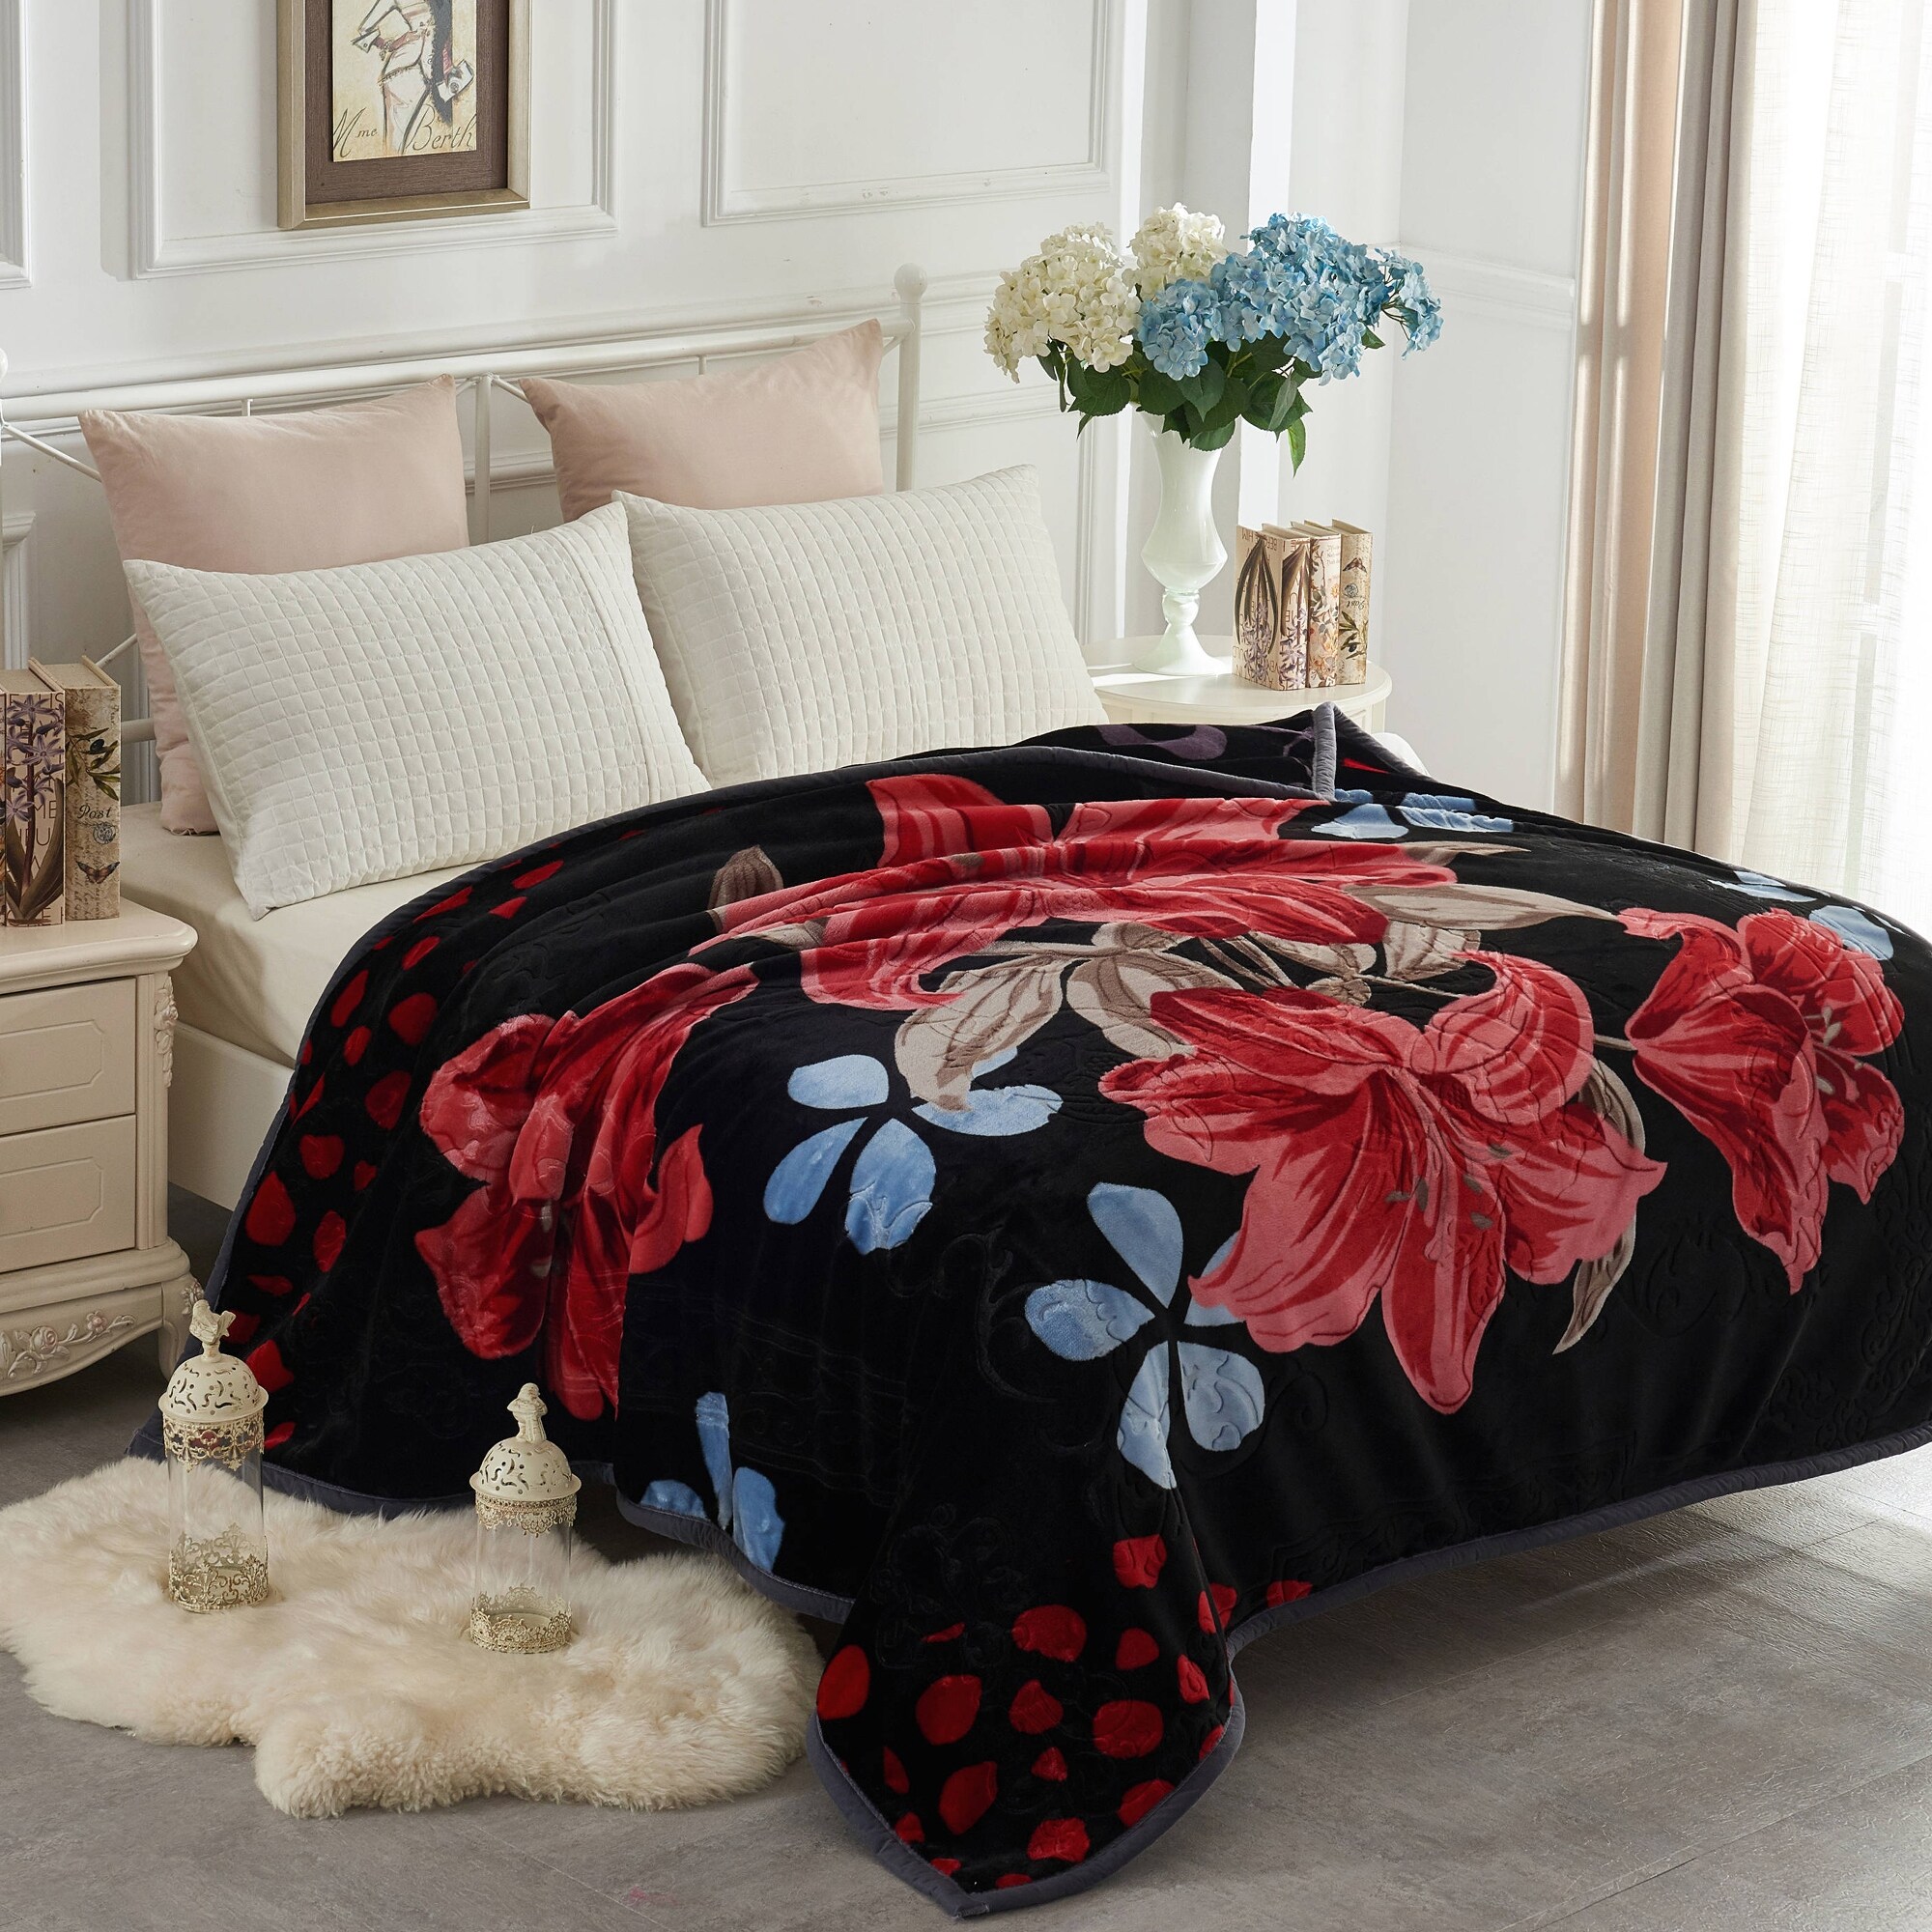 Floral & Animal 2-Ply Heavy Raschel Blanket 85 X 93 - Bed Bath & Beyond -  31080246